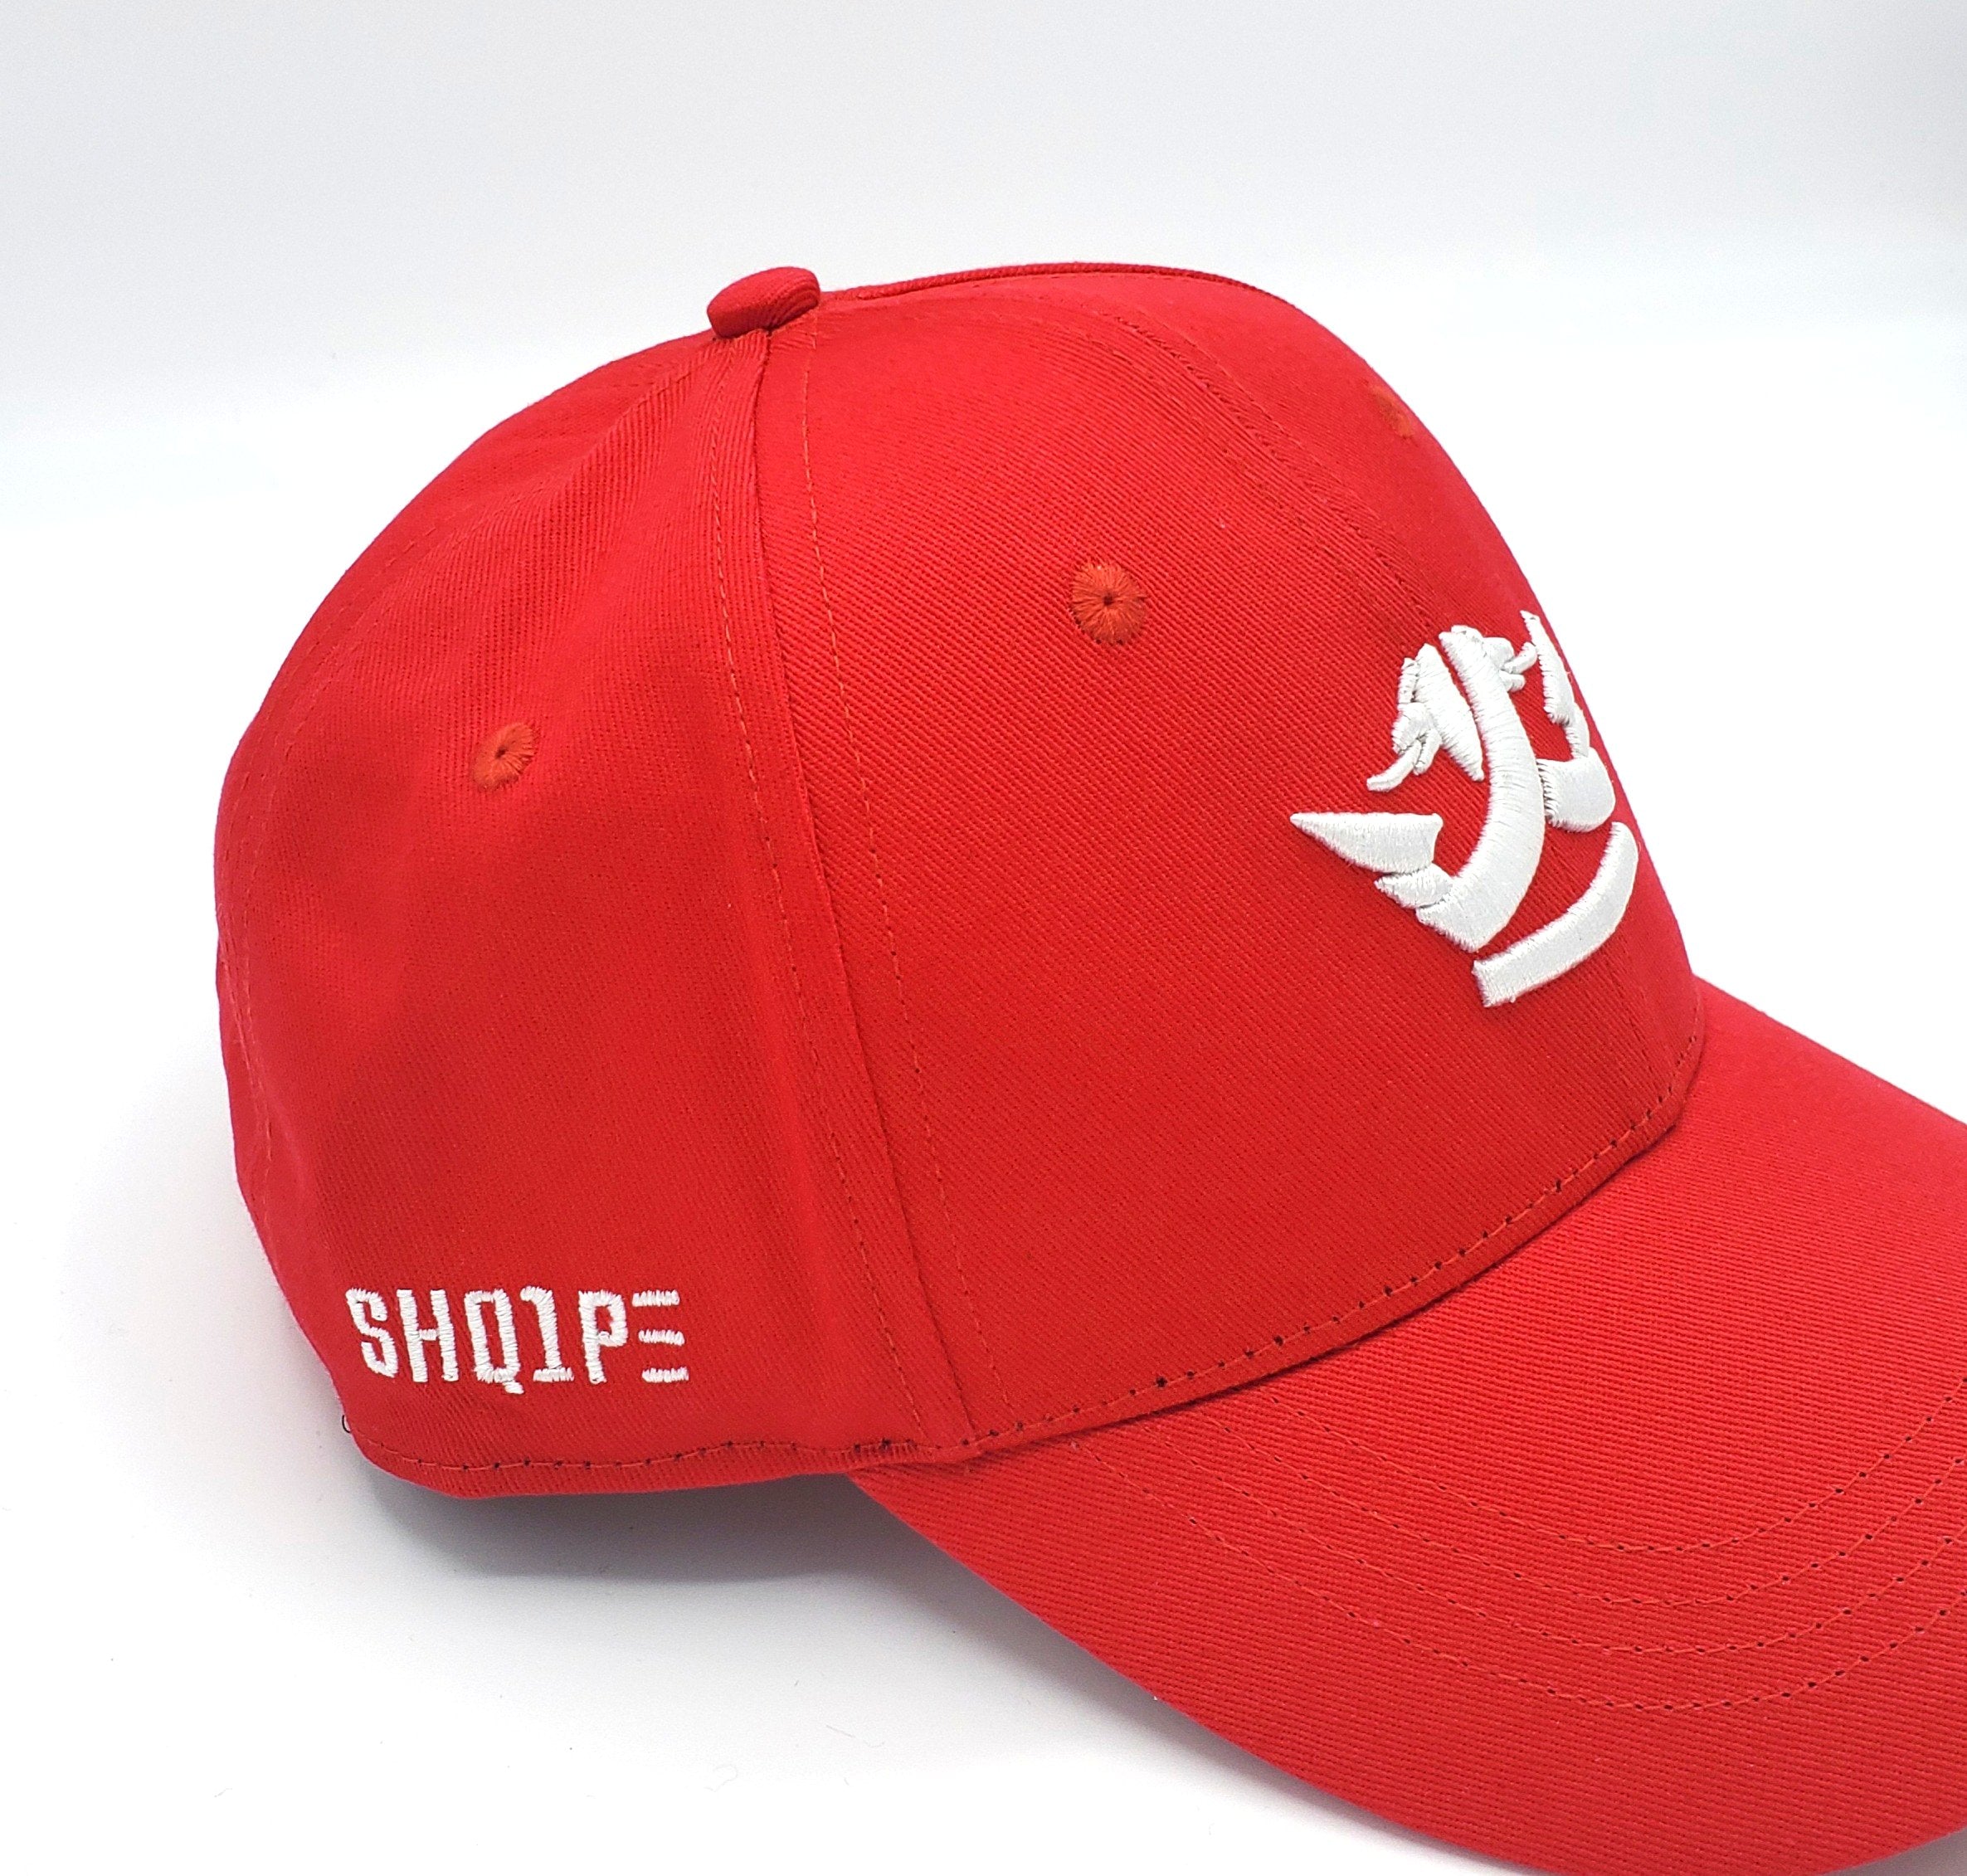 1st Edition Shq1pe Baseball Cap Rot/Weiß